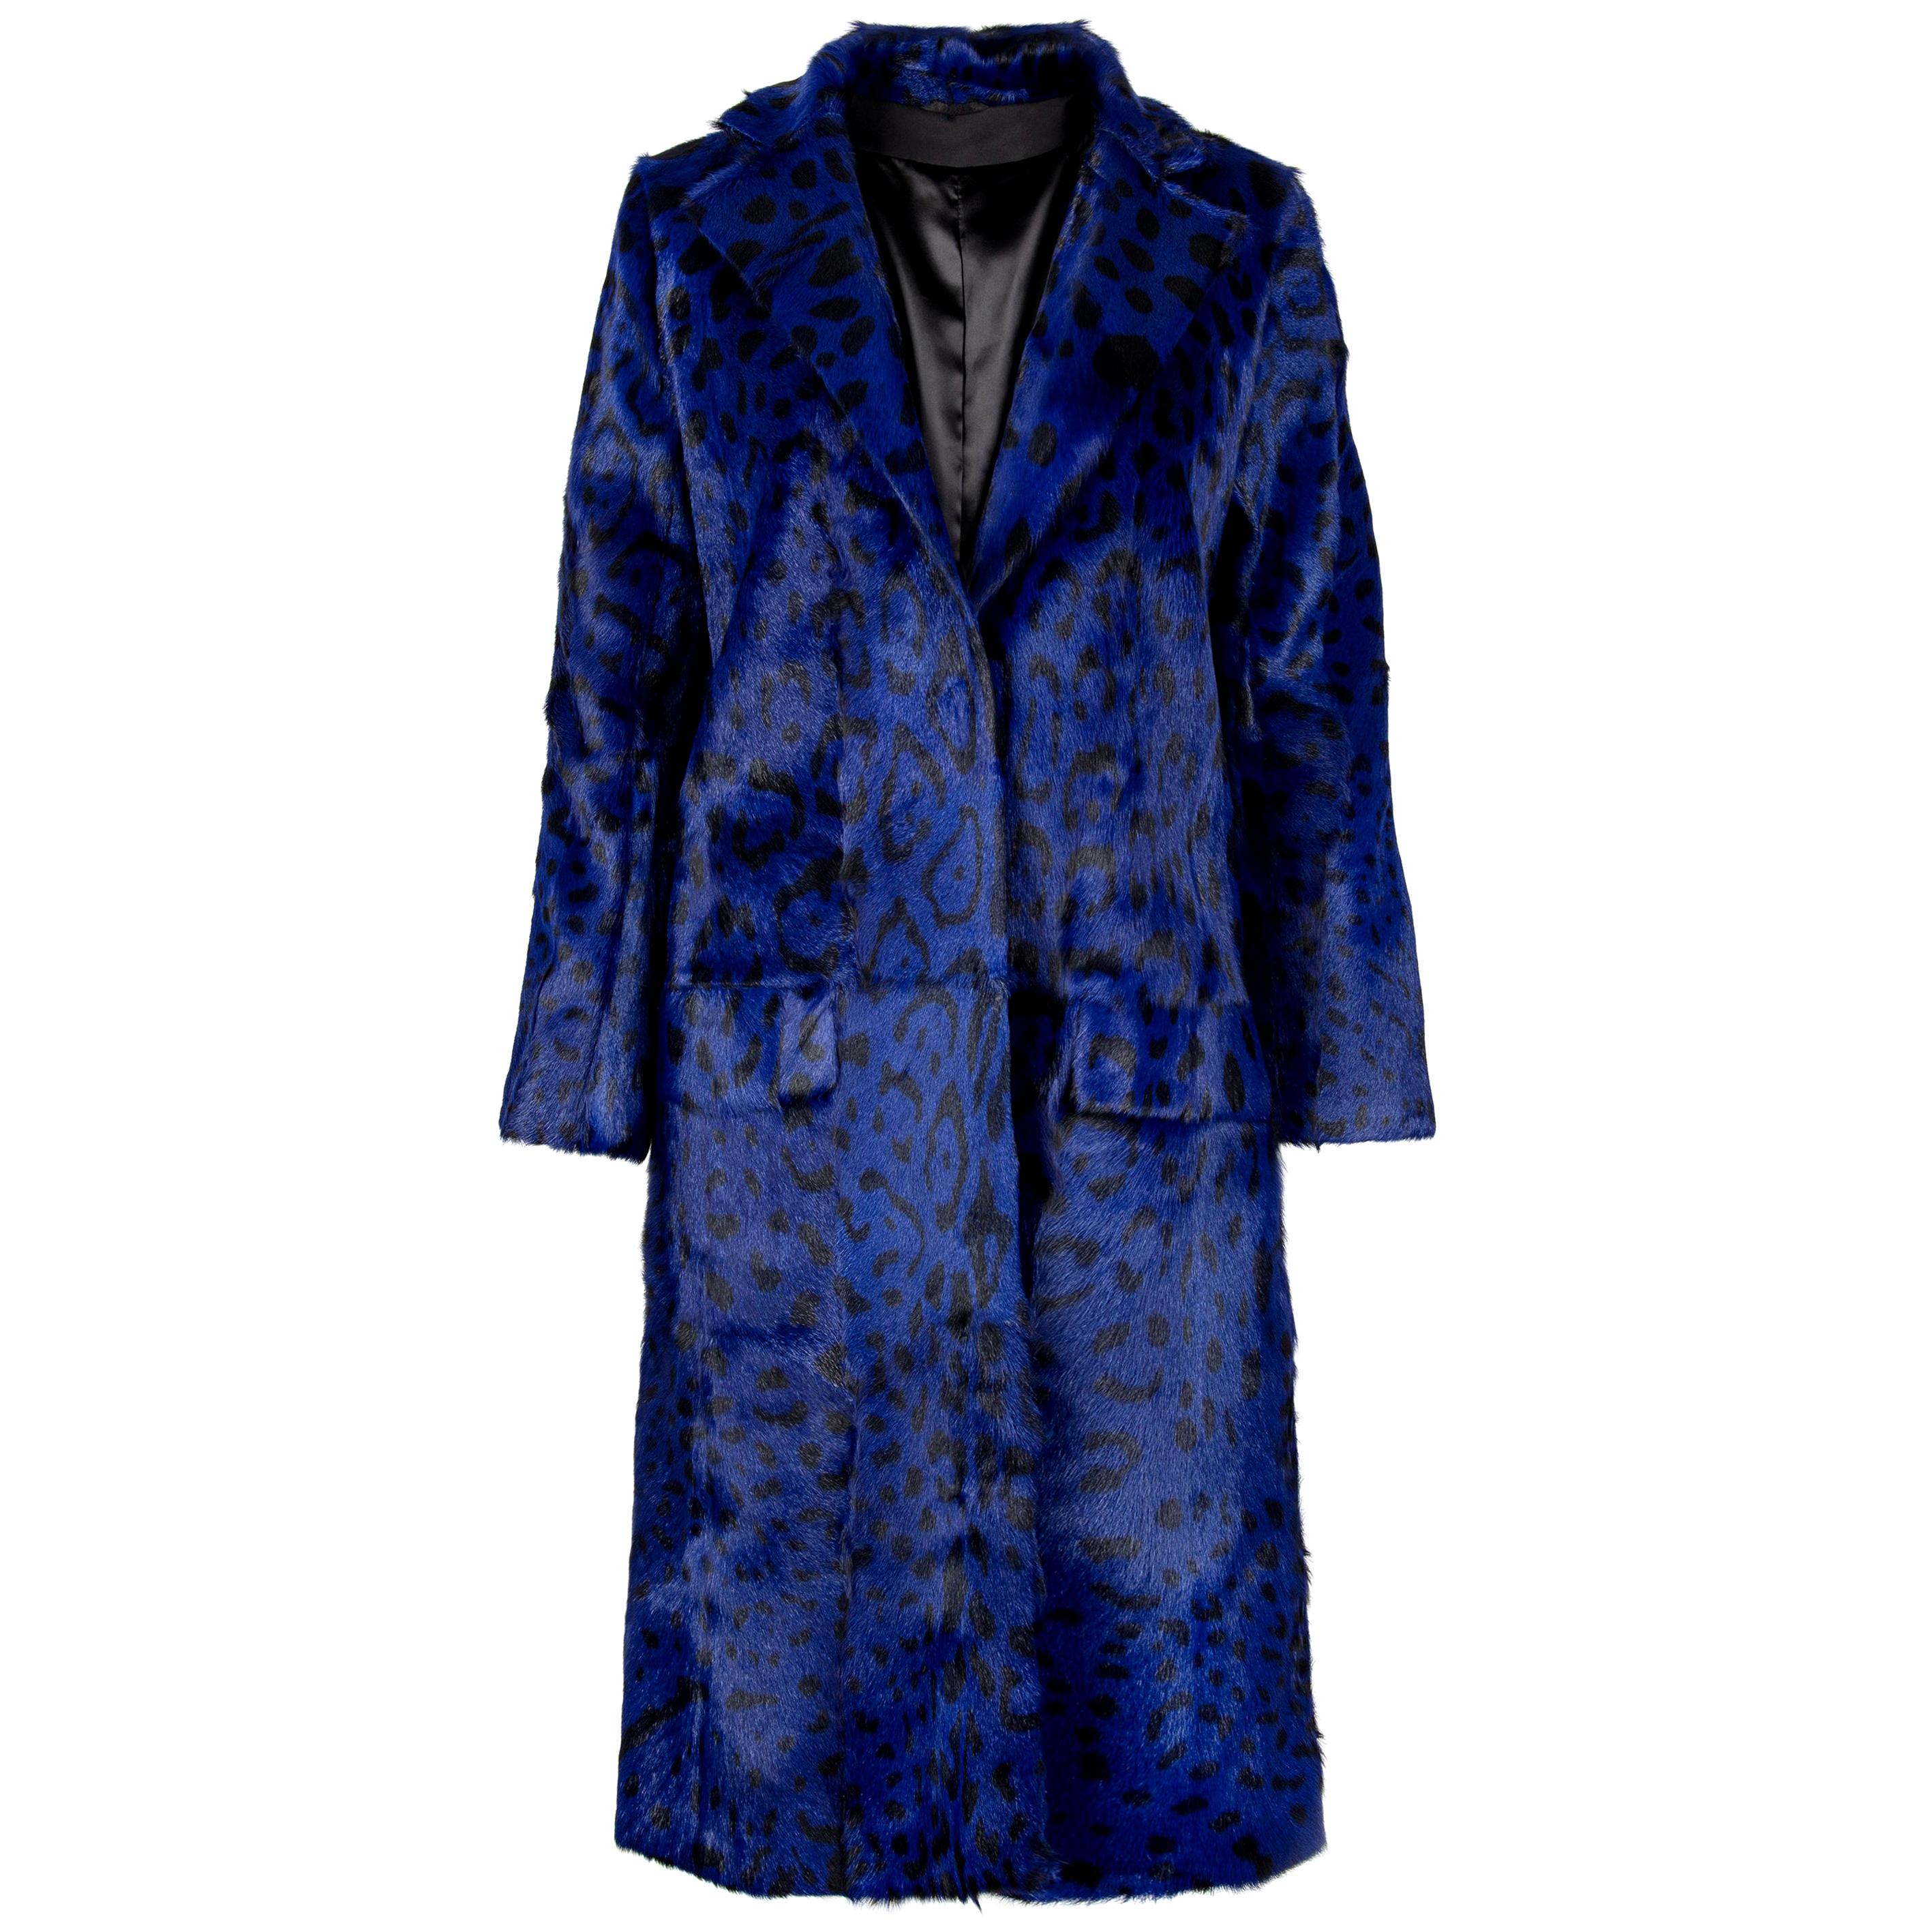 Verheyen London Ink Blue Leopard Print Coat in Goat Hair Fur UK 10 